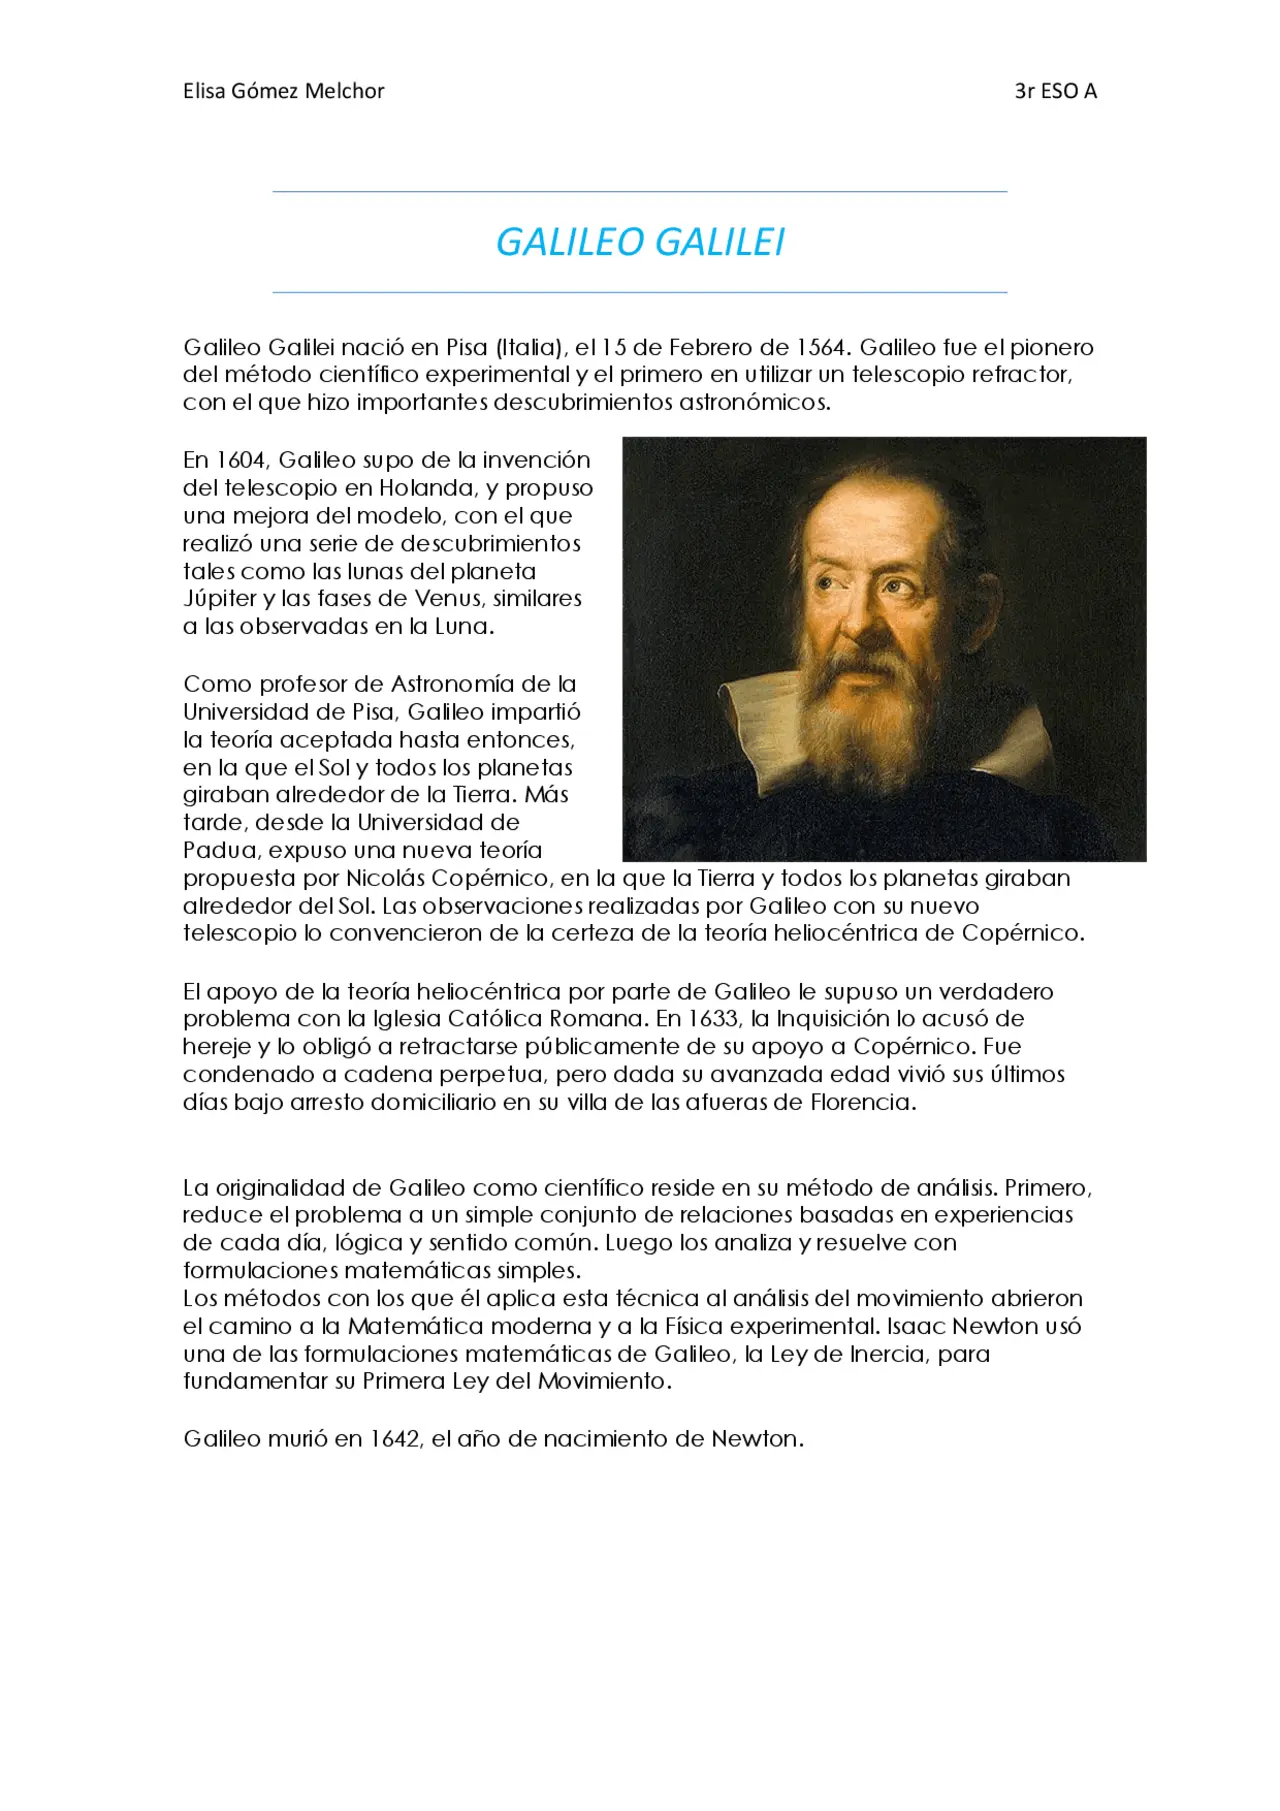 teoria de galileo galilei resumen - Qué teoría sostuvo Galileo Galilei